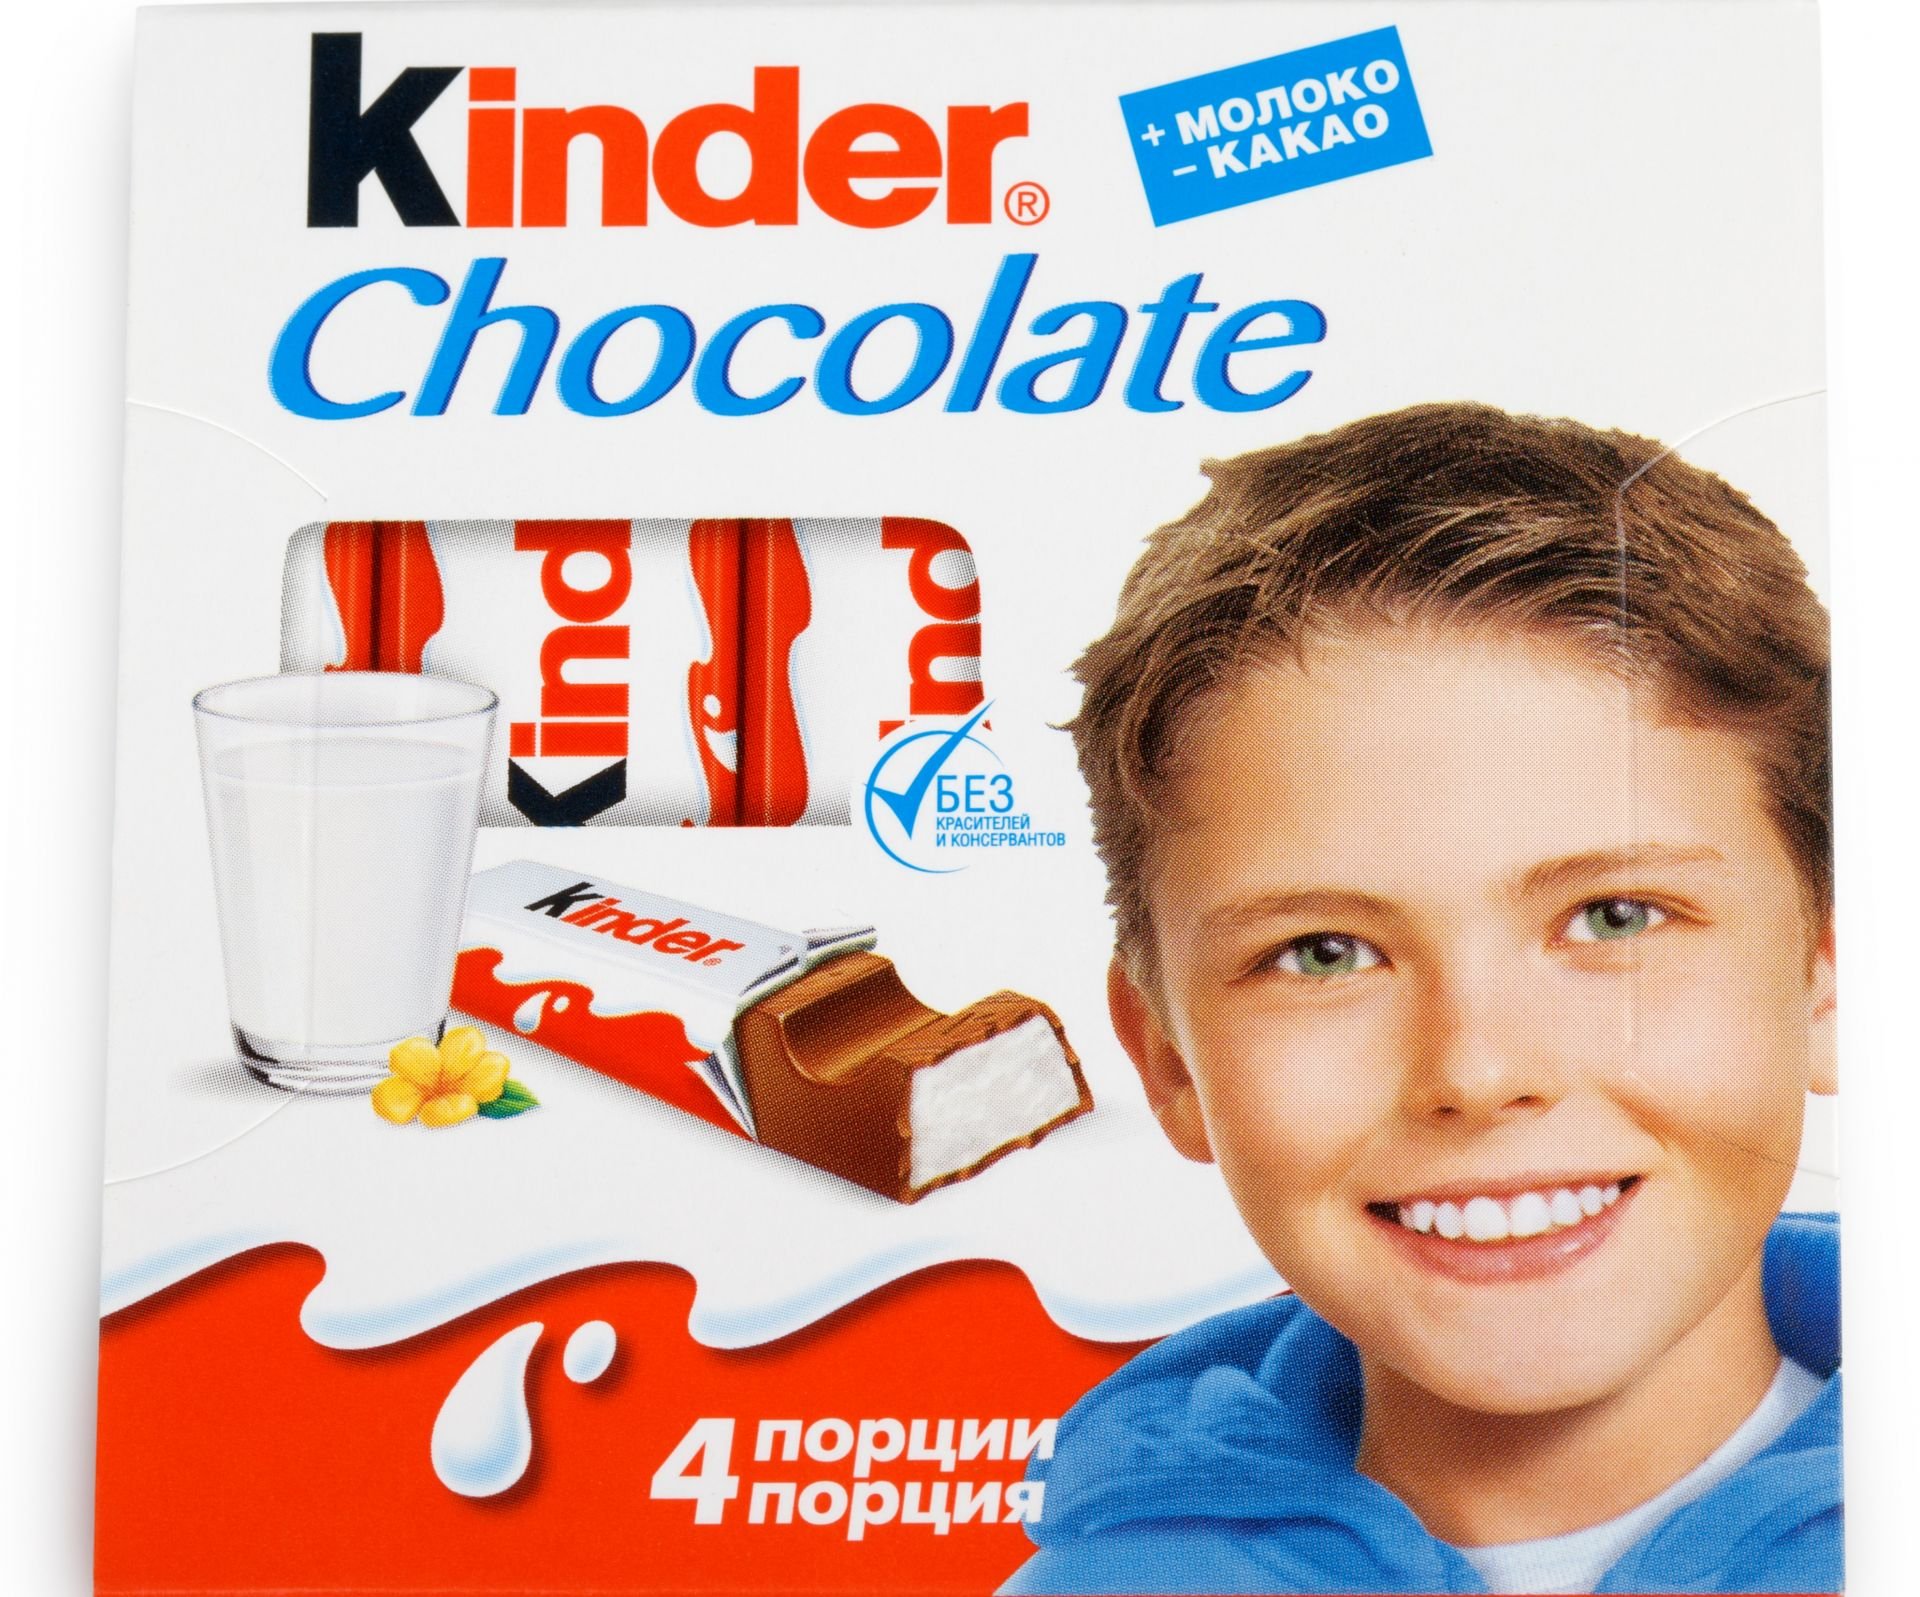 Kinder index. Гюнтер Эурингер kinder. Мальчик с Киндер шоколада. Шоколадка Киндер. Киндер шоколад мальчик на обложке.